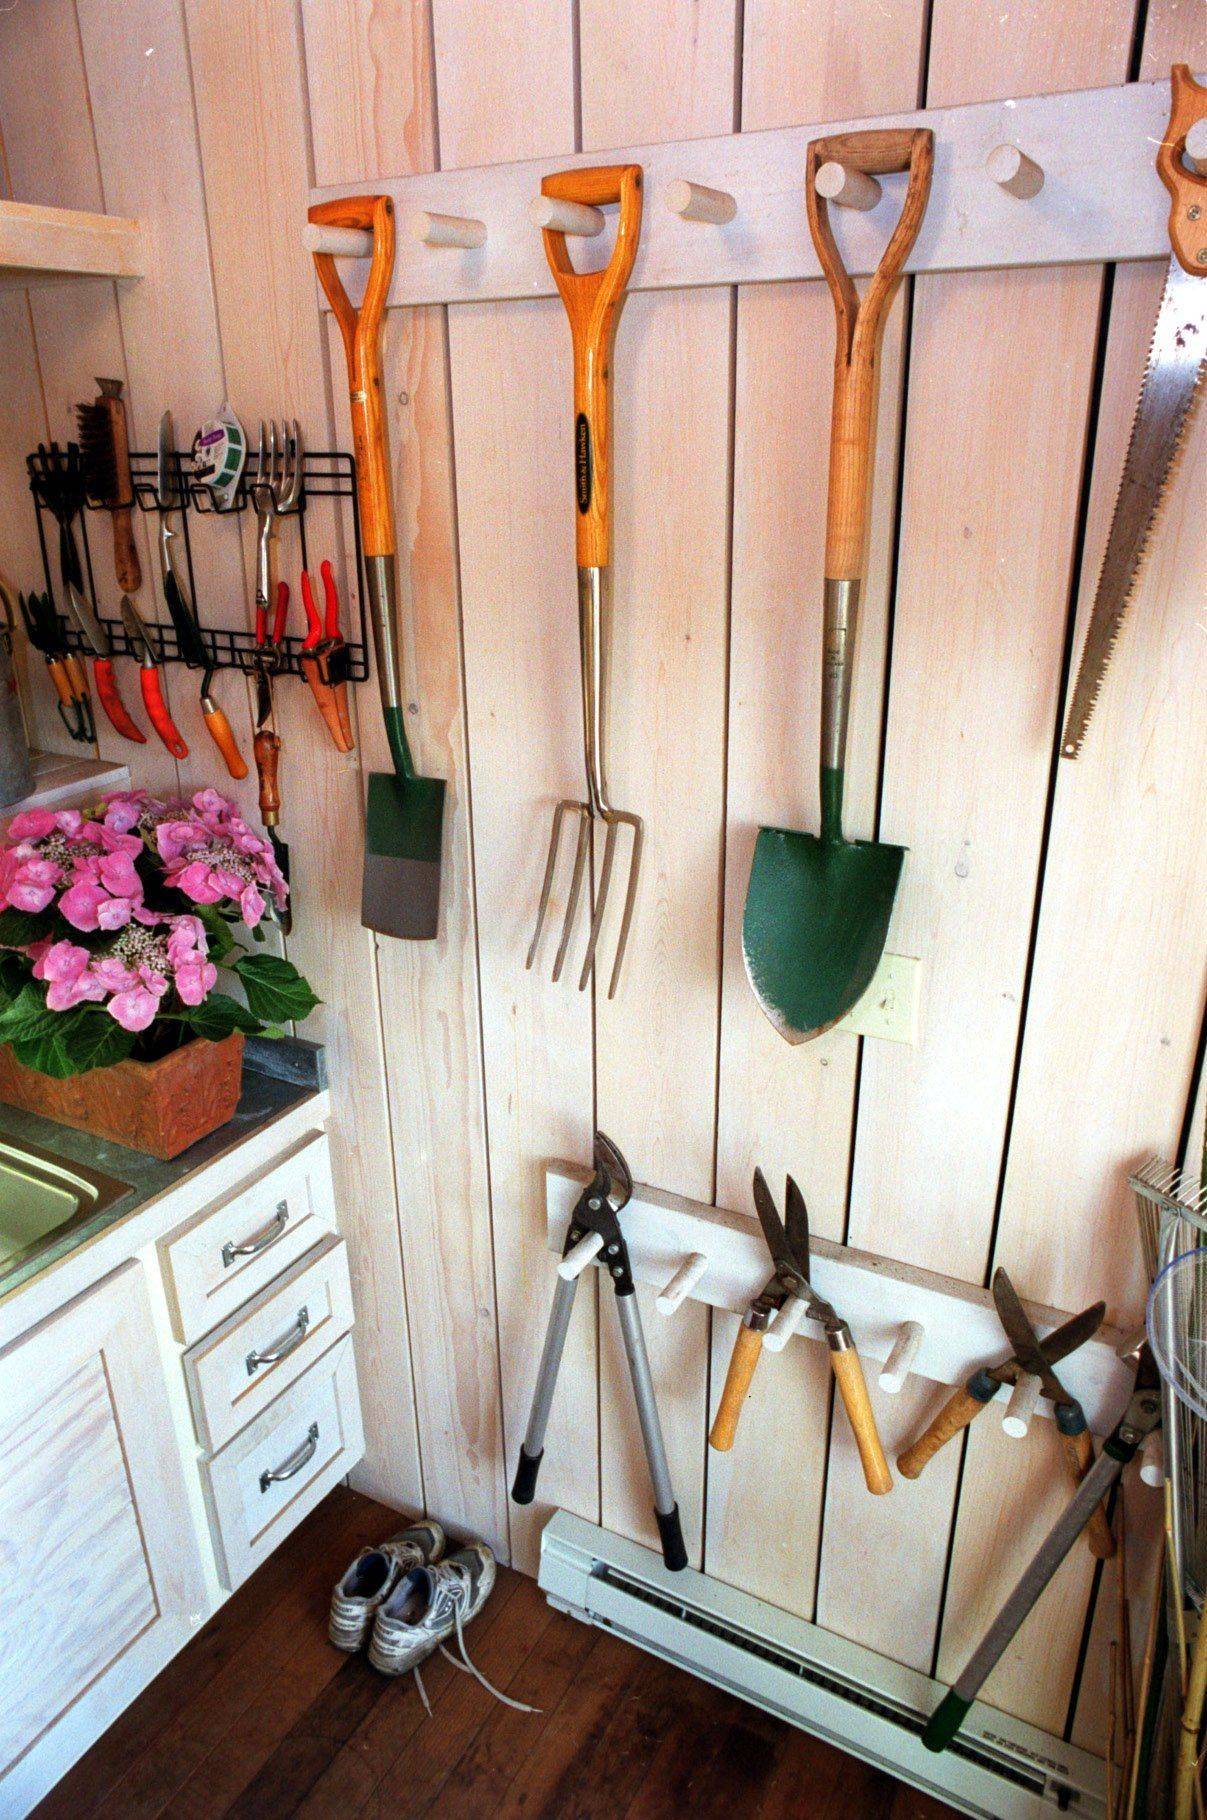 Garden Tool Organization